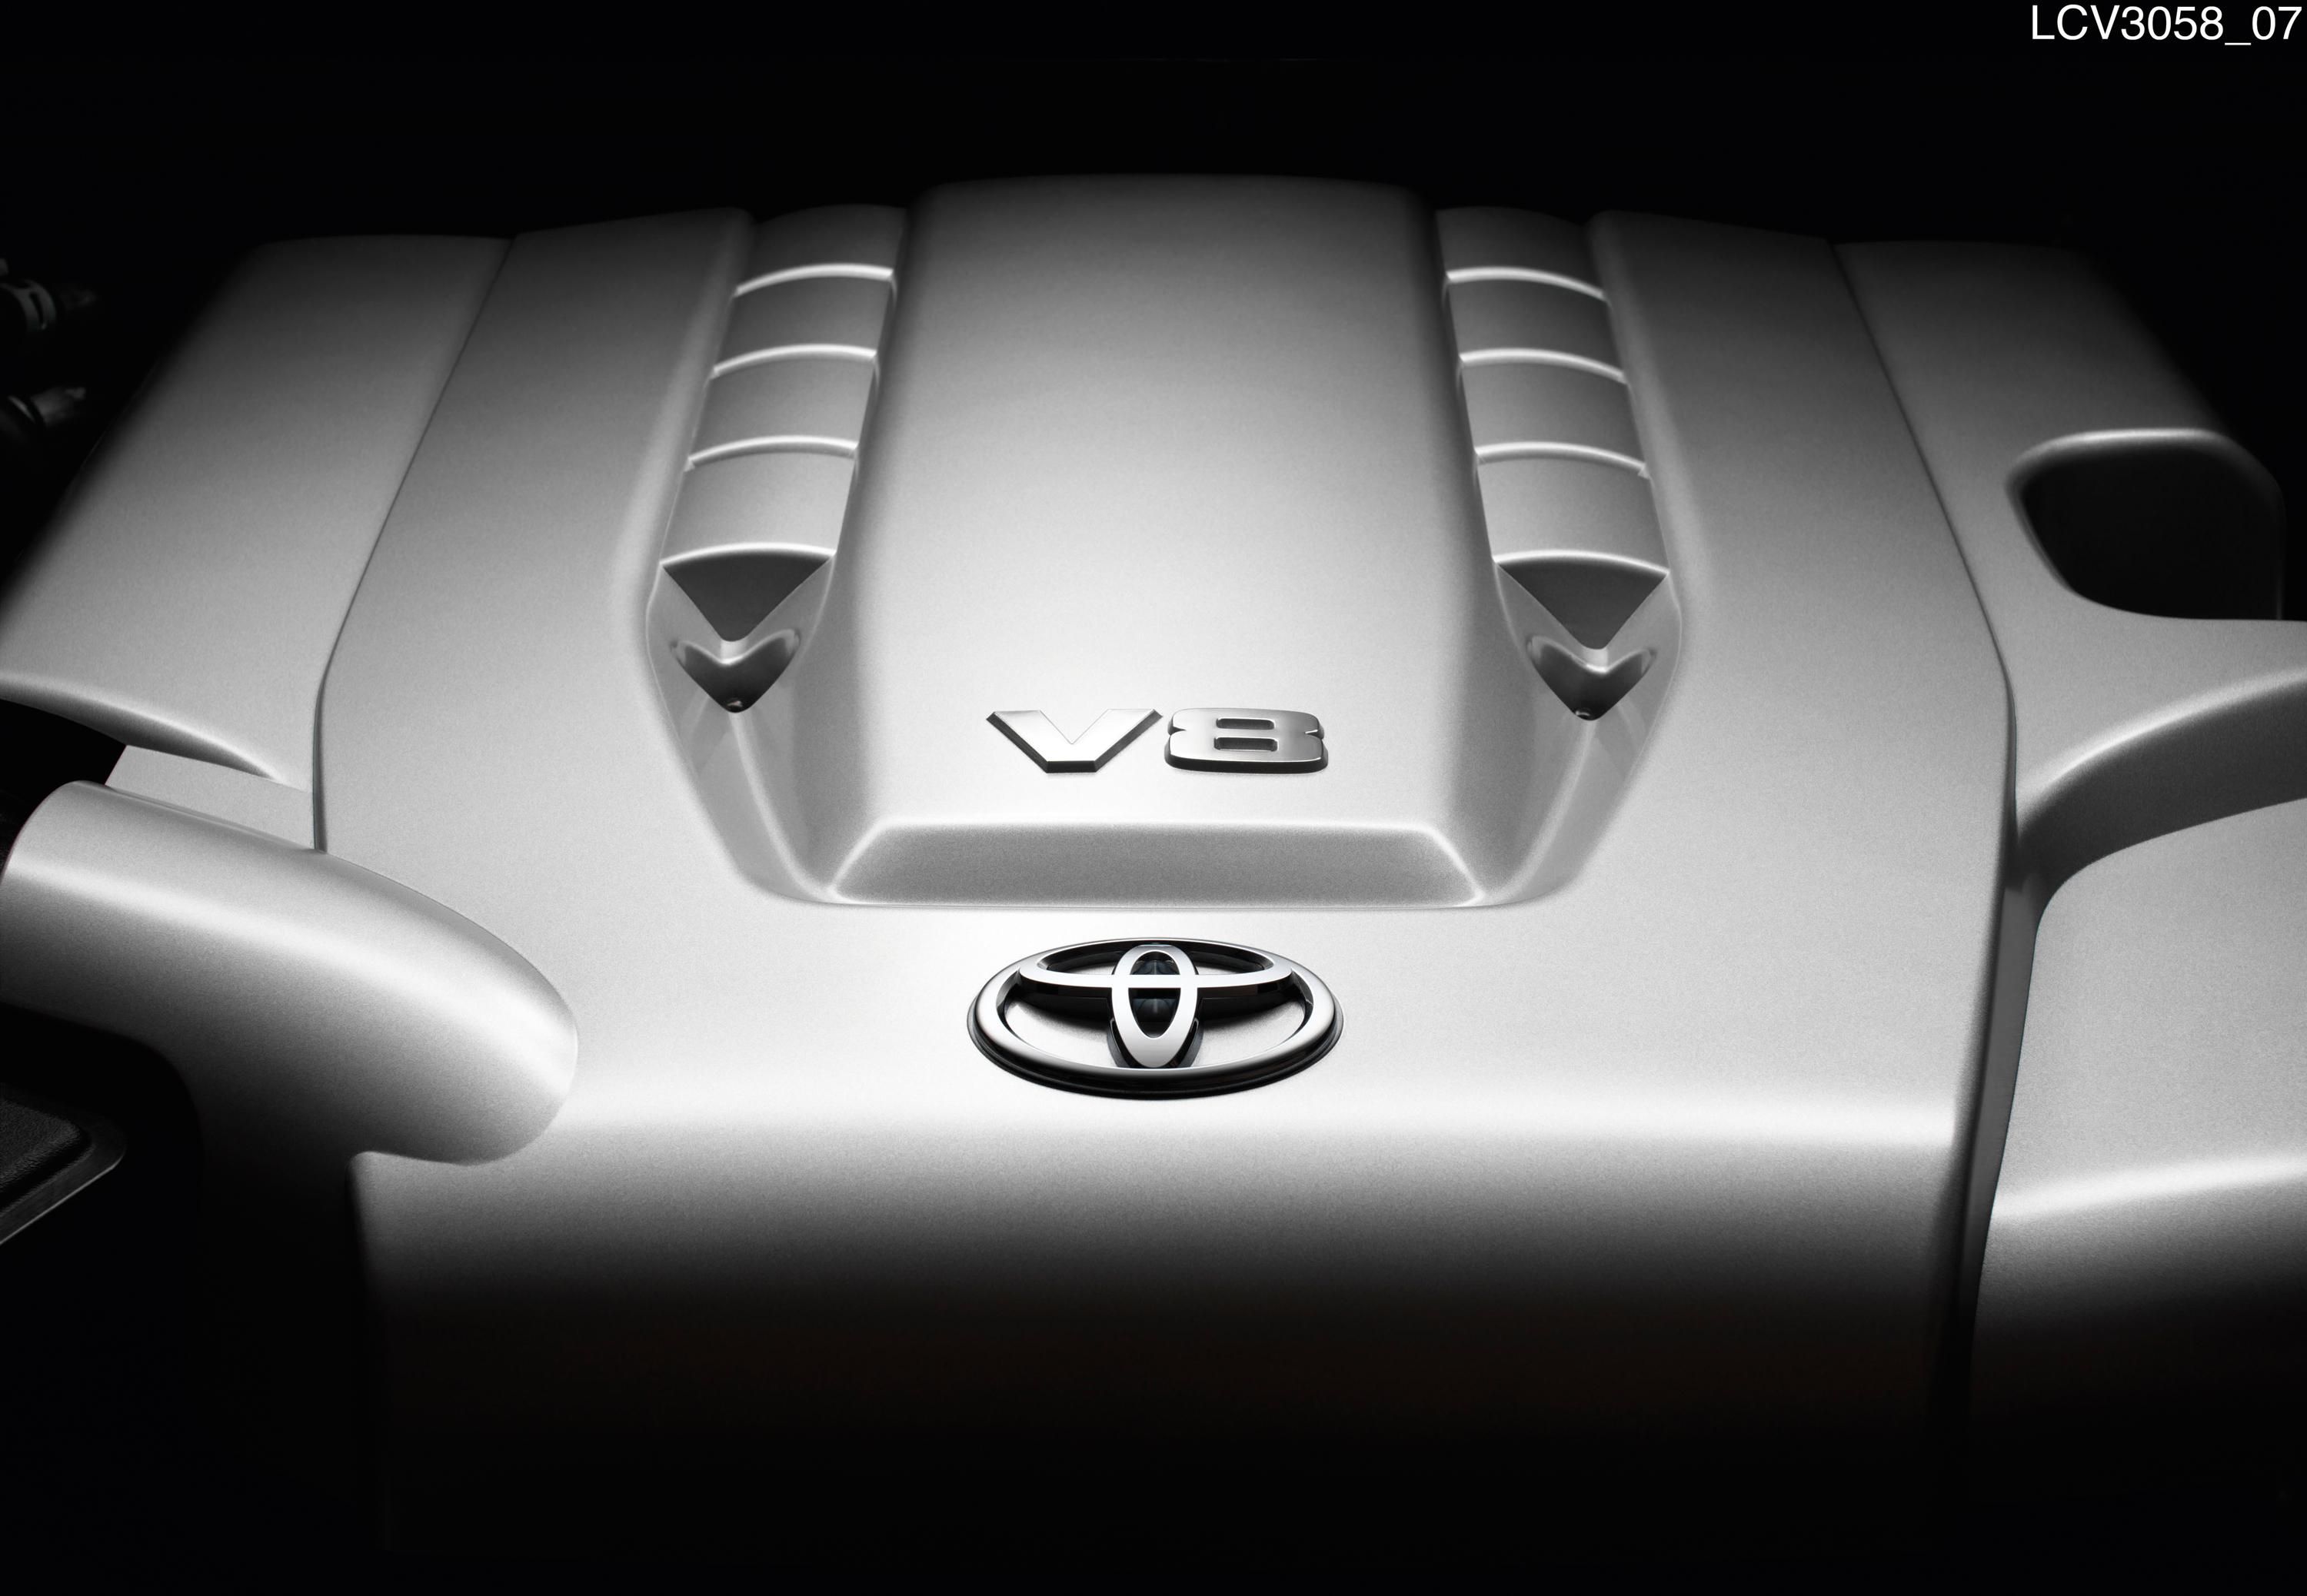 2008 Toyota Land Cruiser V8